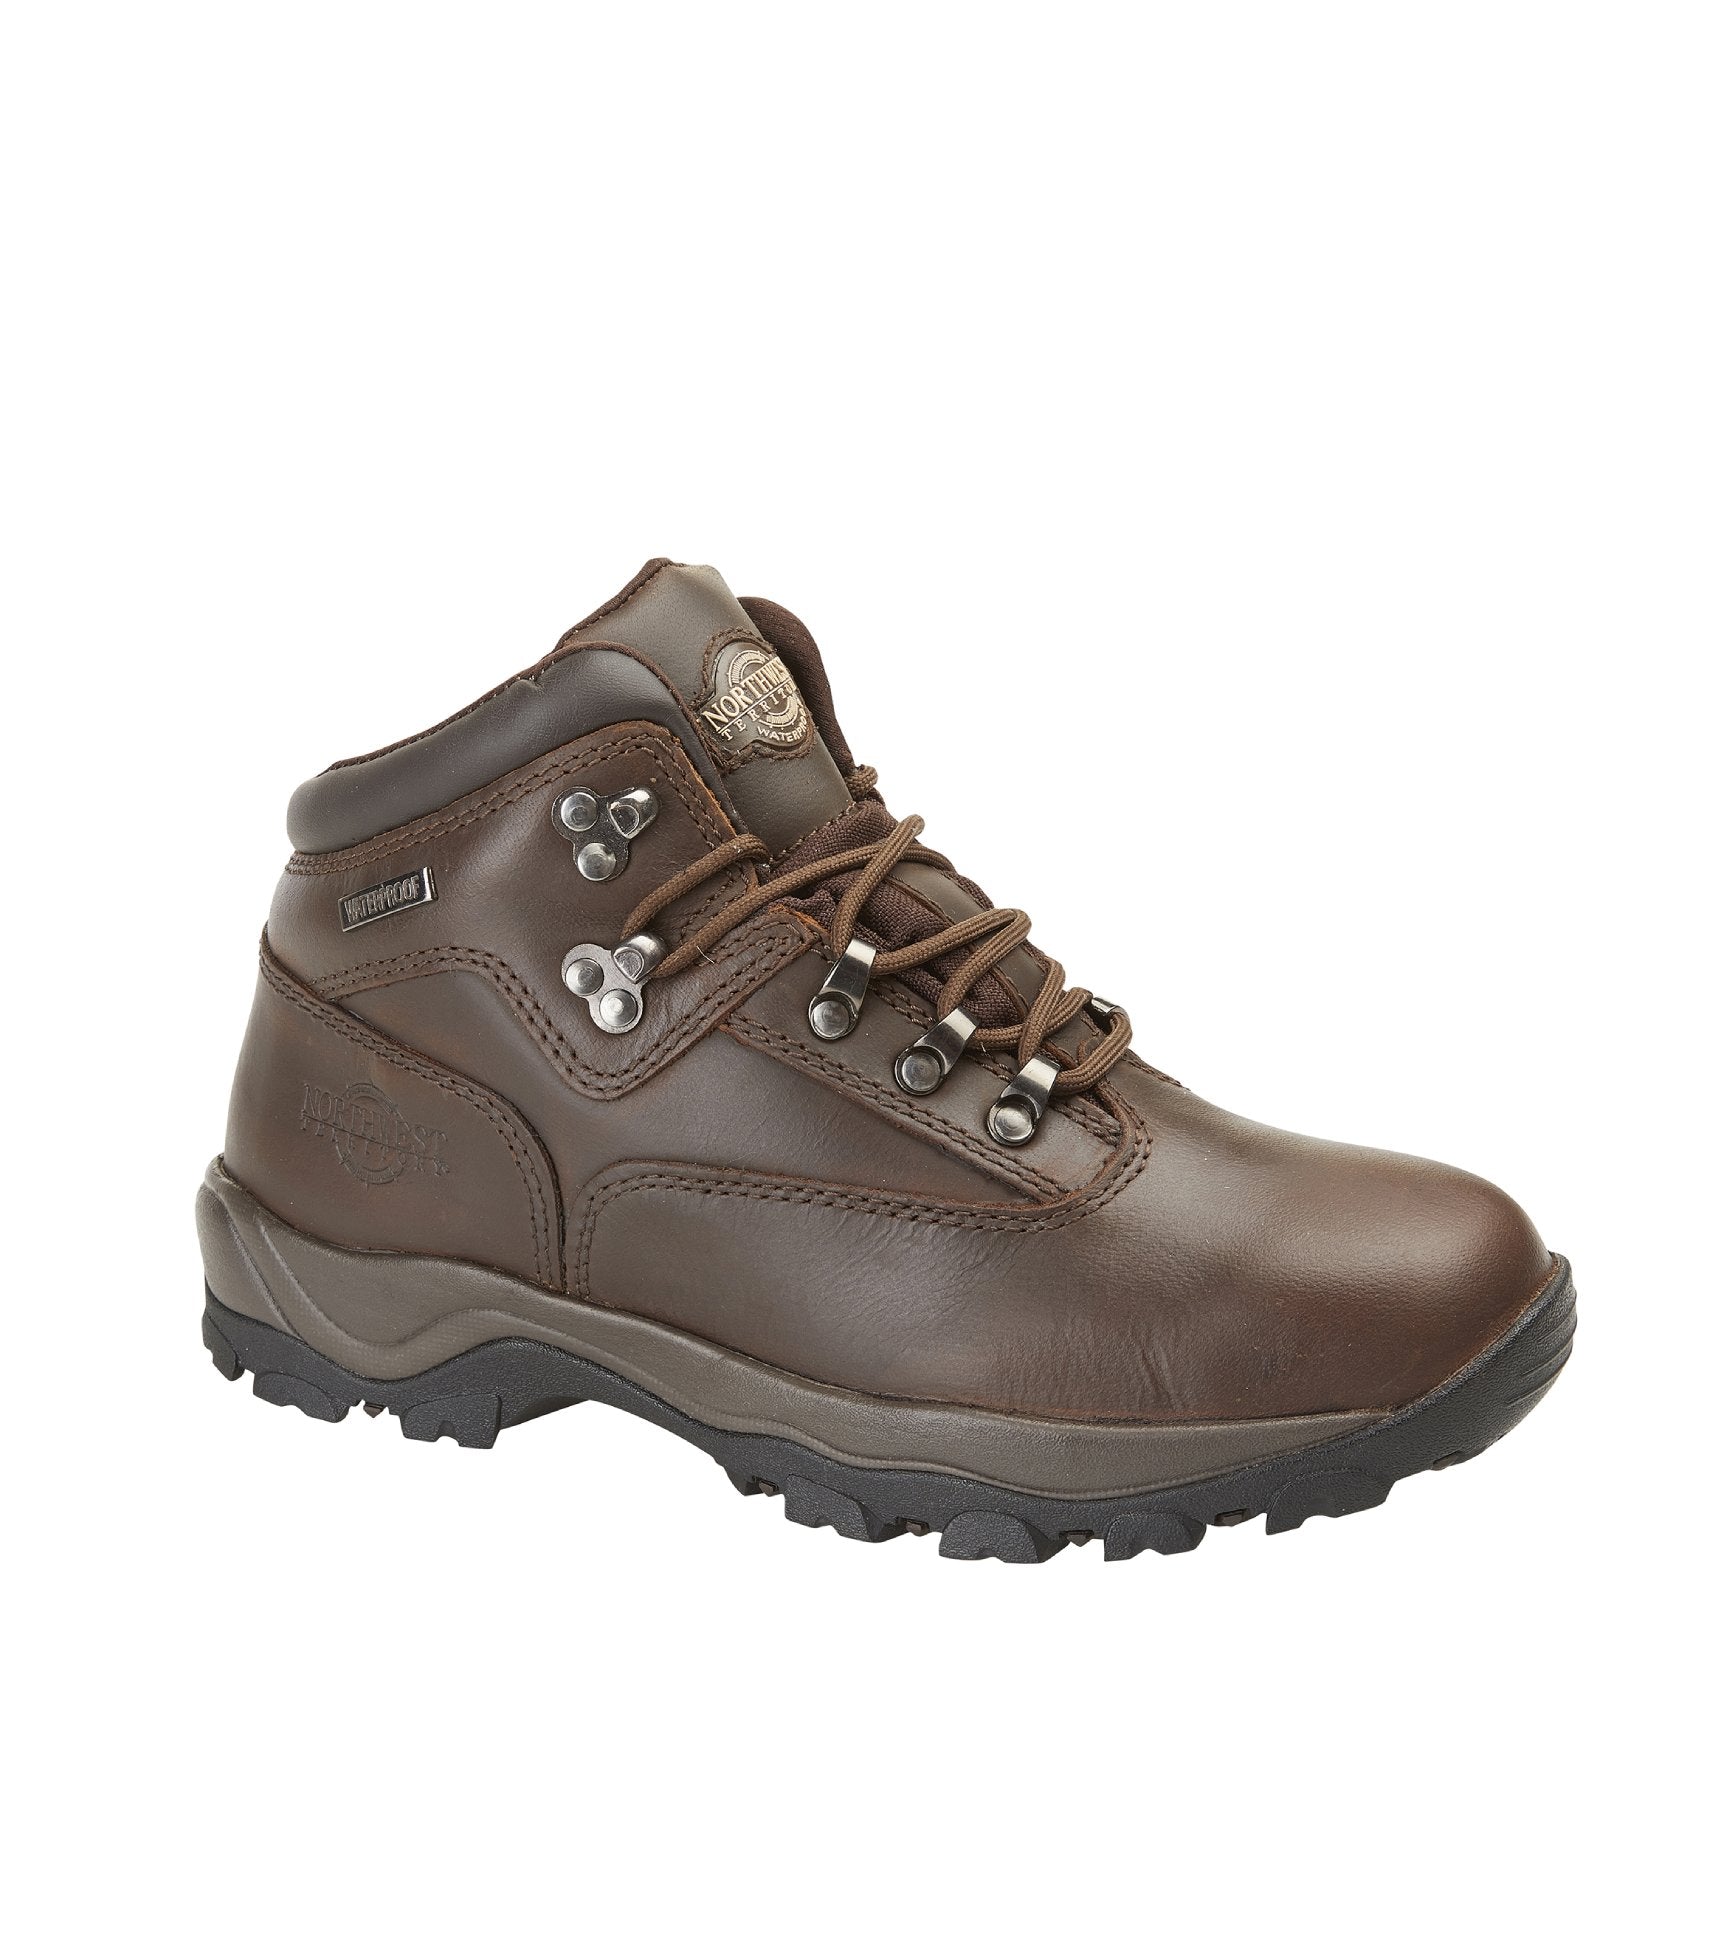 Men's Leather Waterproof Walking Boots - #COLOR_WAXY BROWN